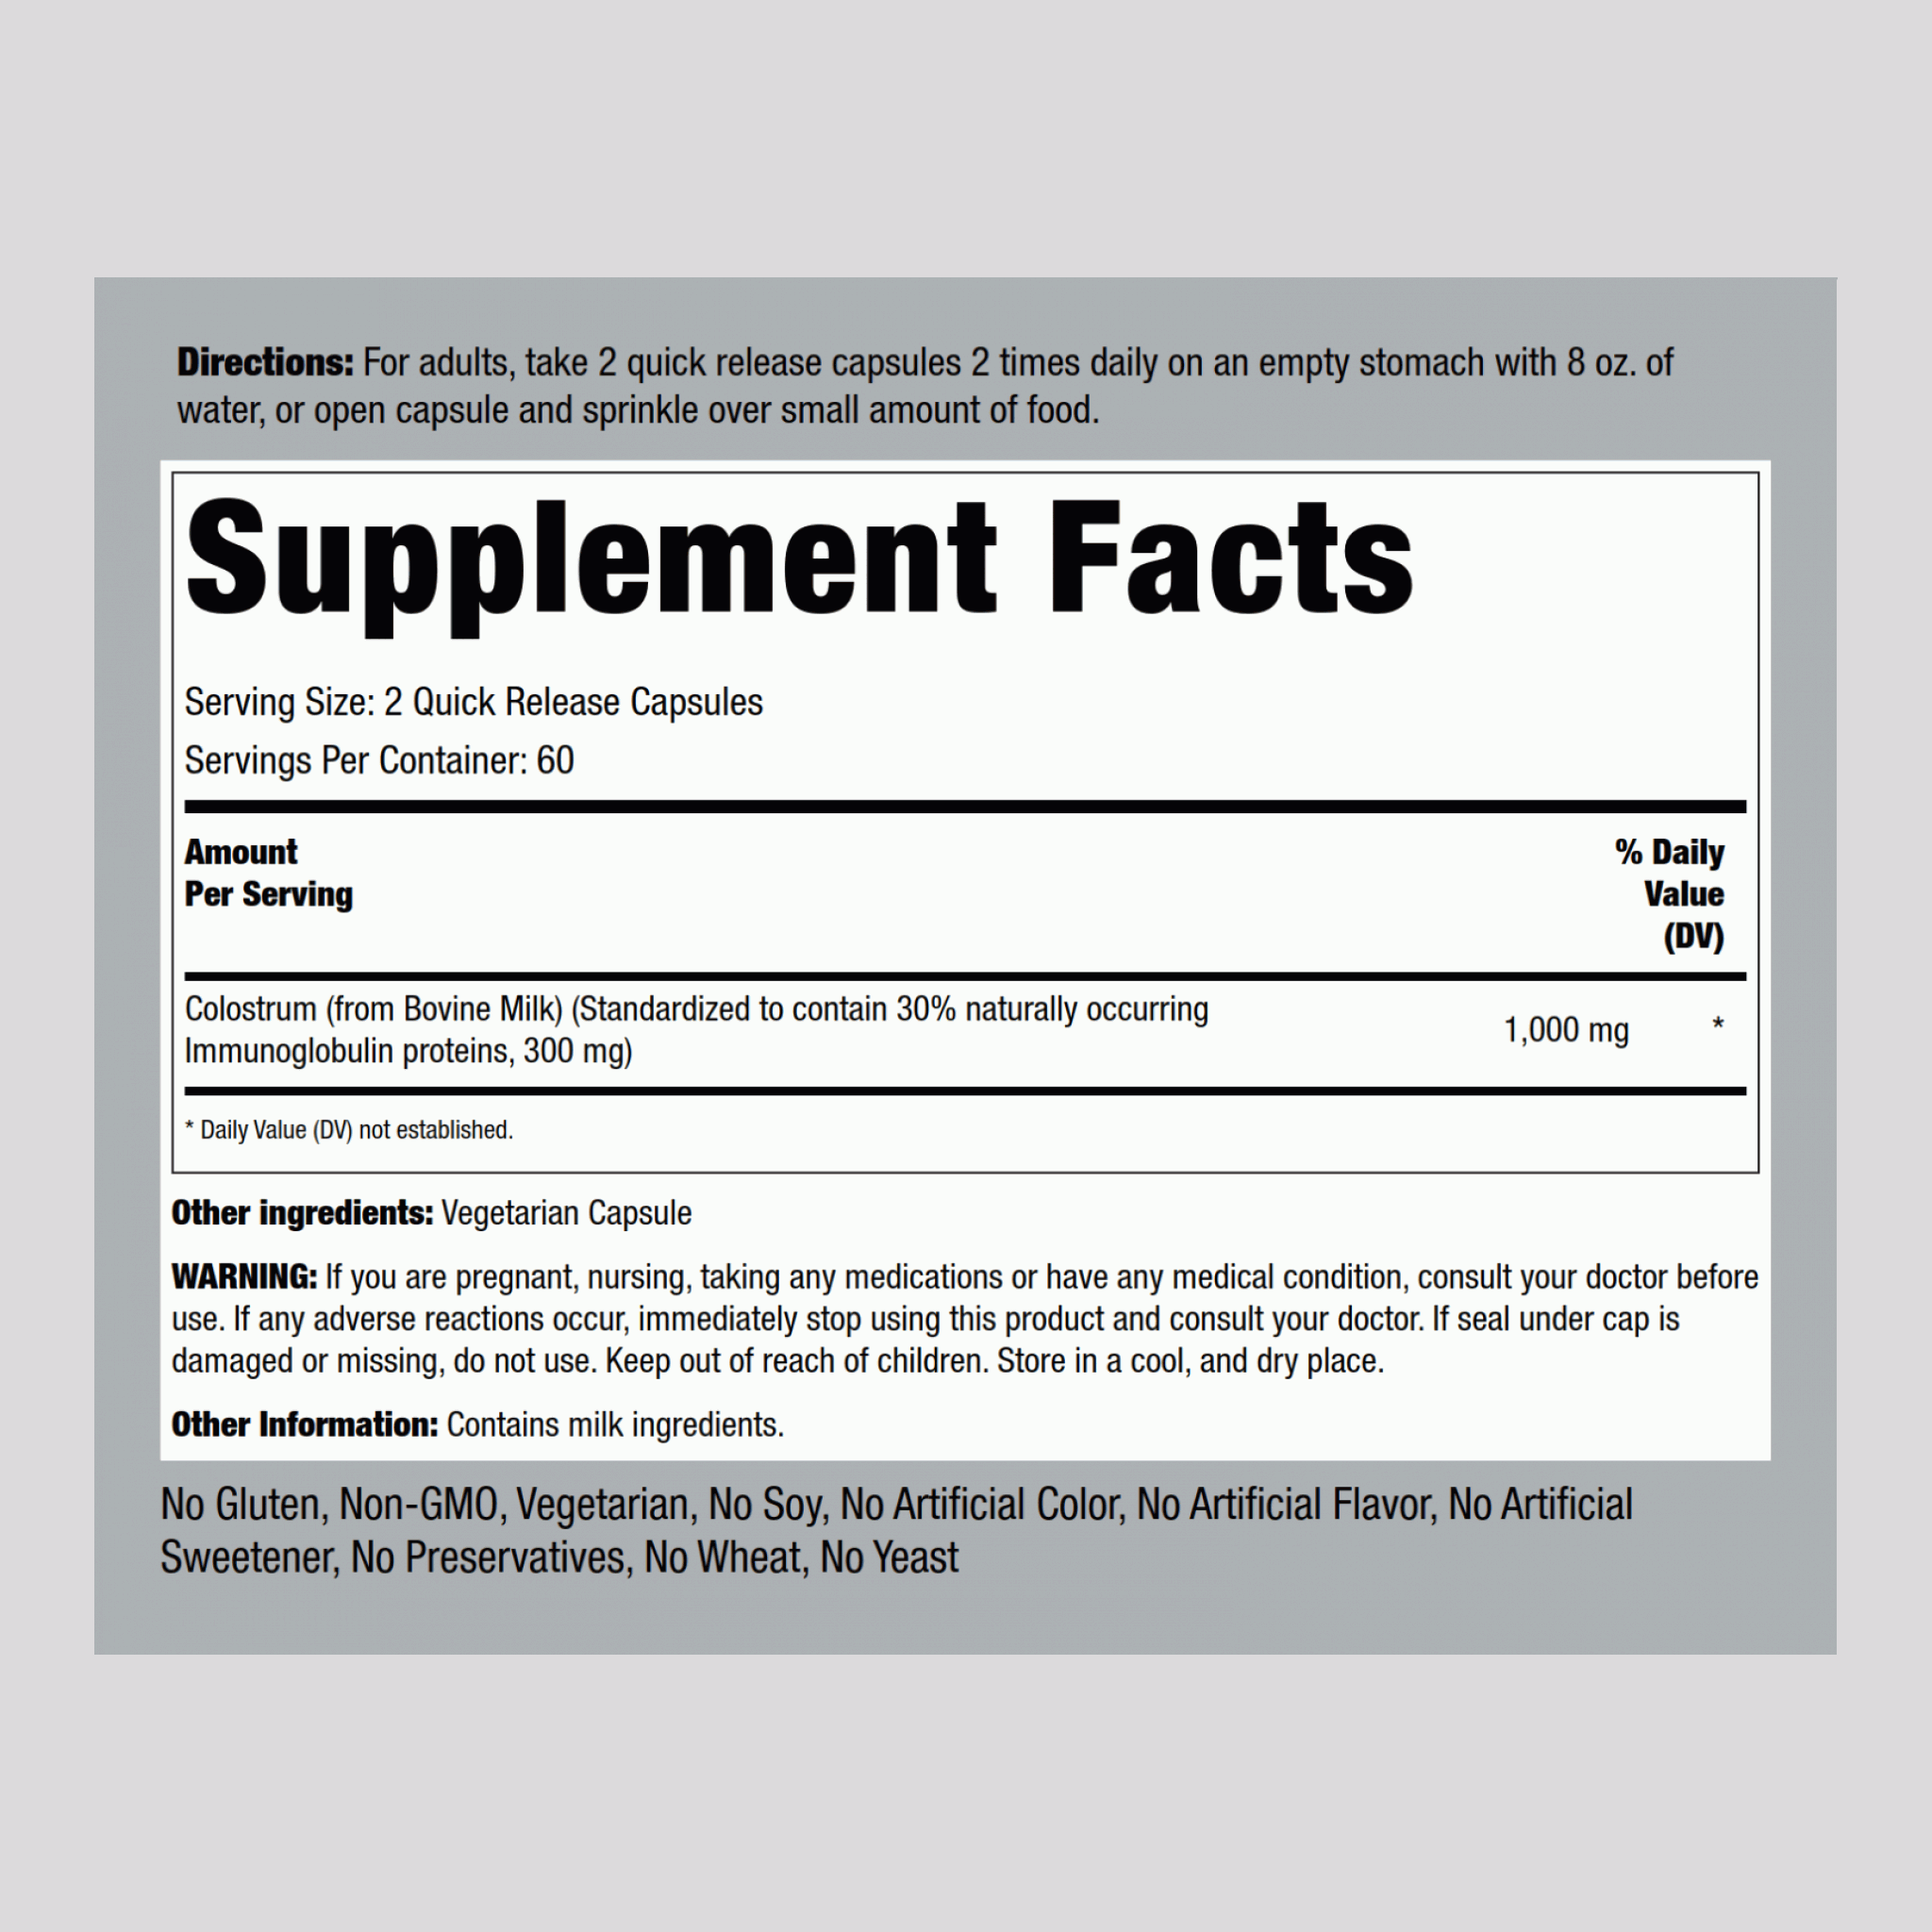 Ultra Colostrum (High IG), 1000 mg (per serving), 120 Vegetarian Capsules, 2  Bottles